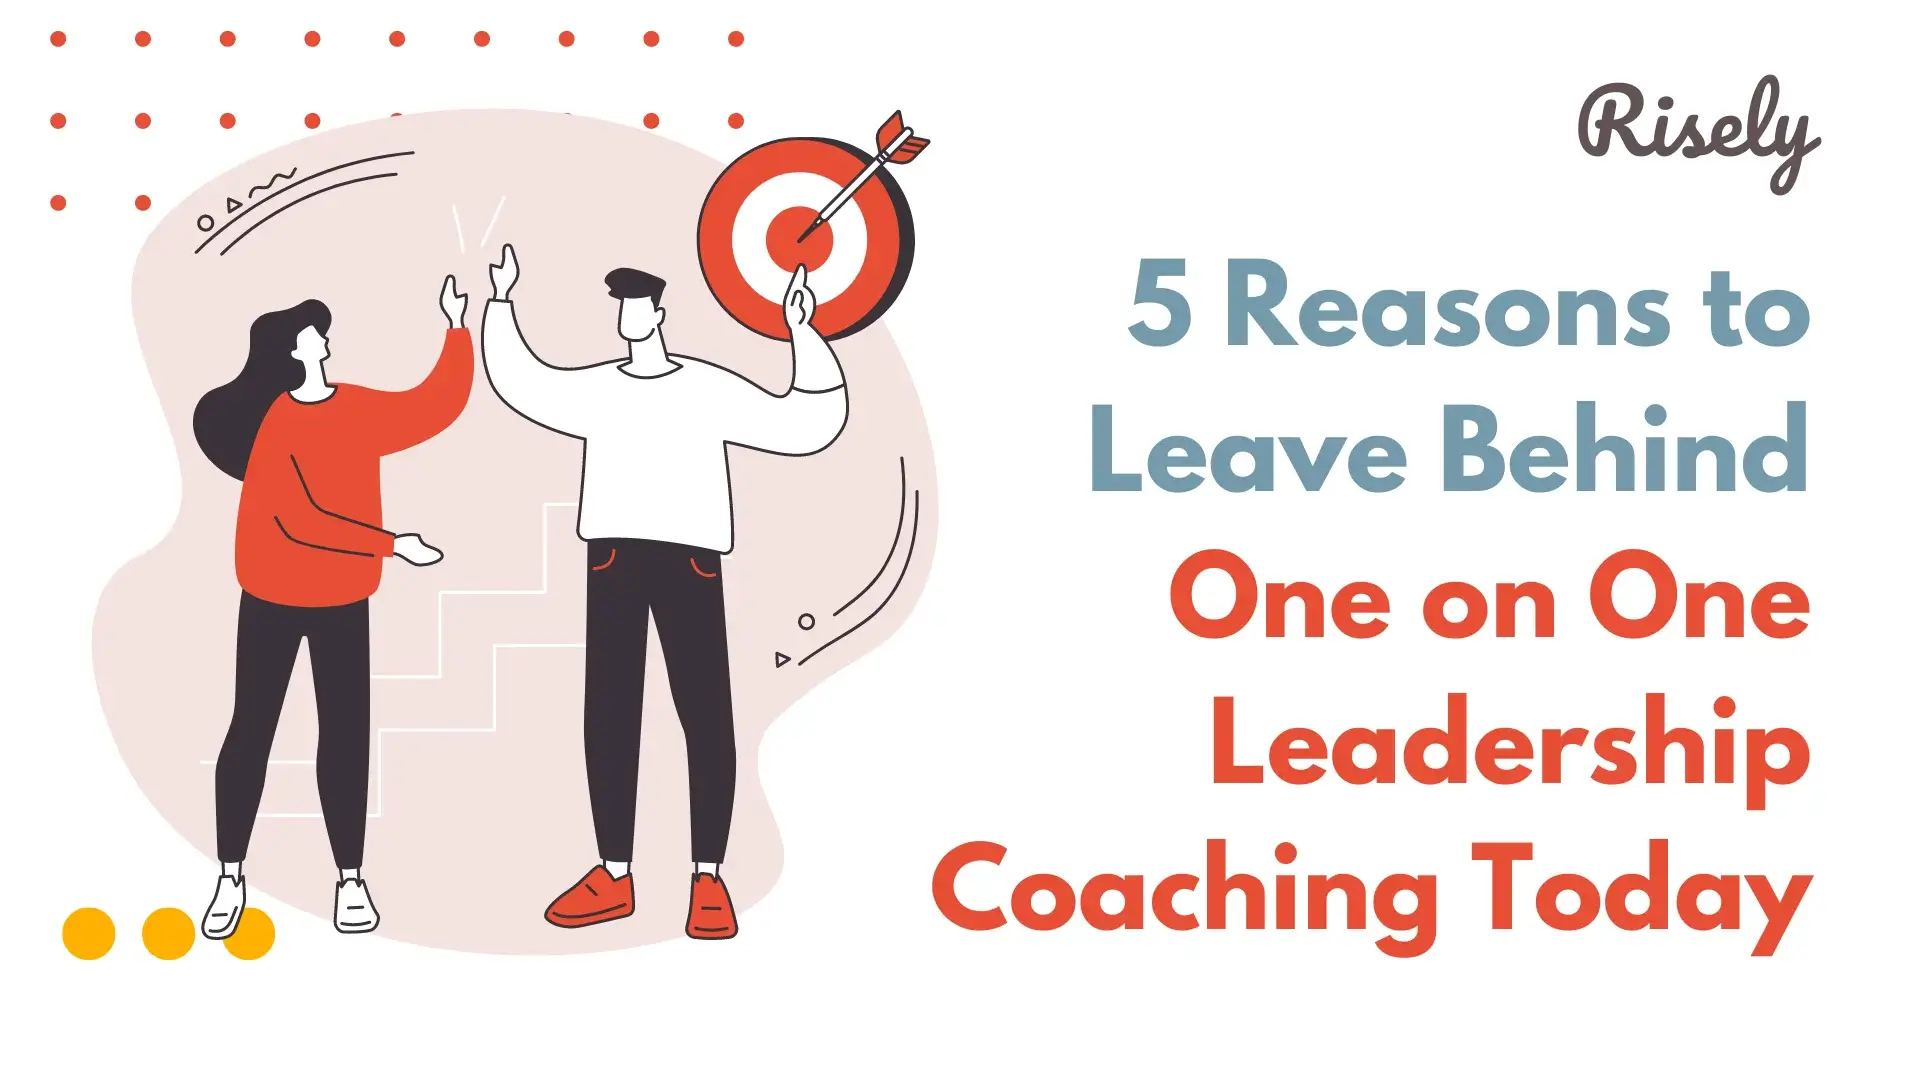 One on One Leadership Coaching